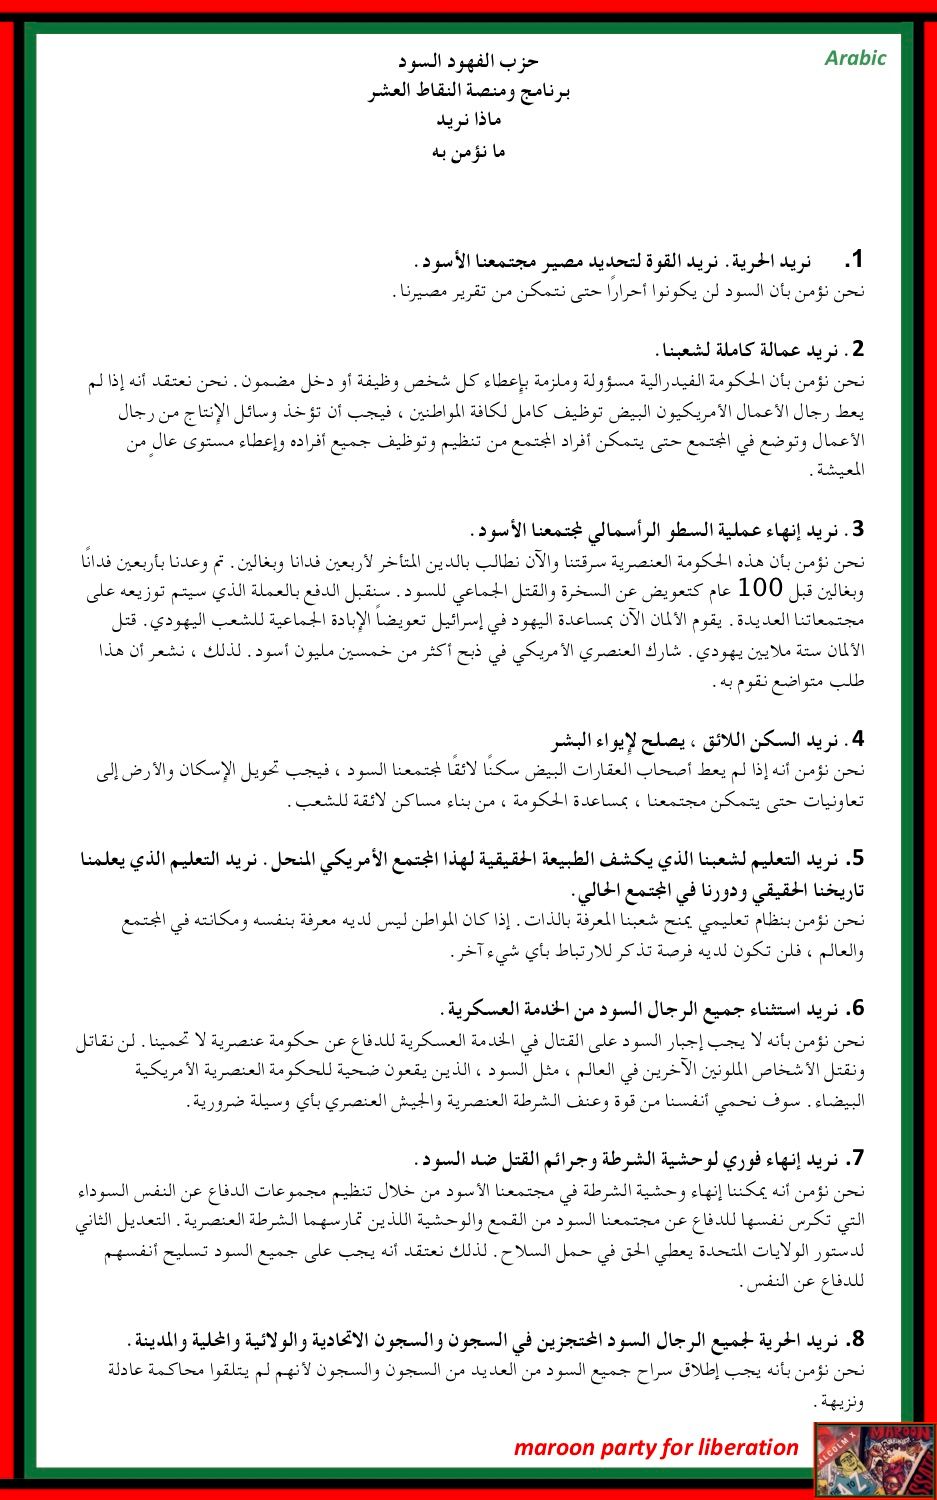 Arabic translation of Black Panther Party for Self Defense 10point Platform and Program 1